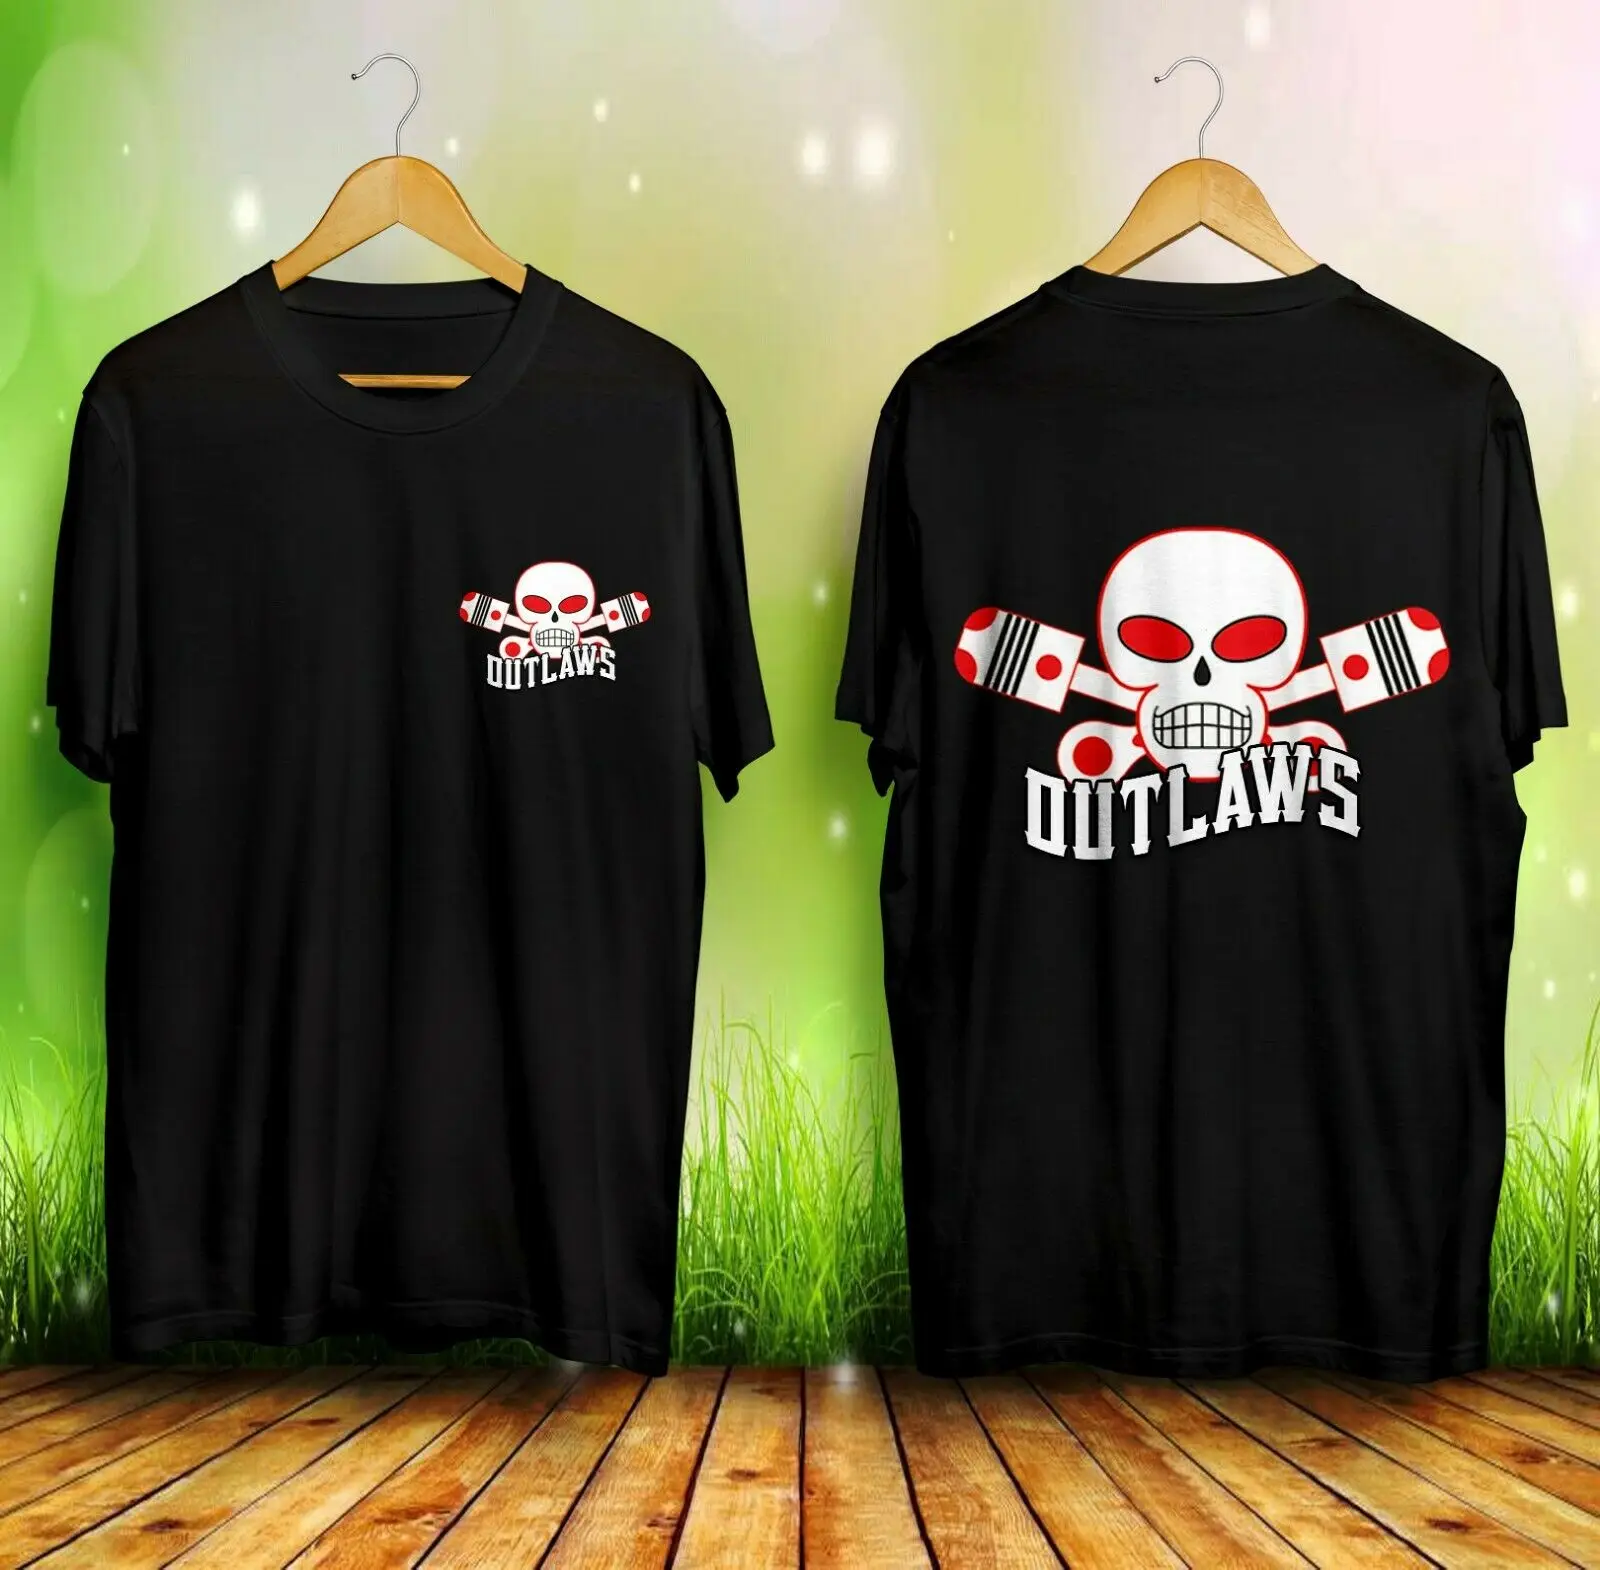 Футболки Outlaw с логотипом мотоцикла мужские футболки коротким рукавом 2 стороны